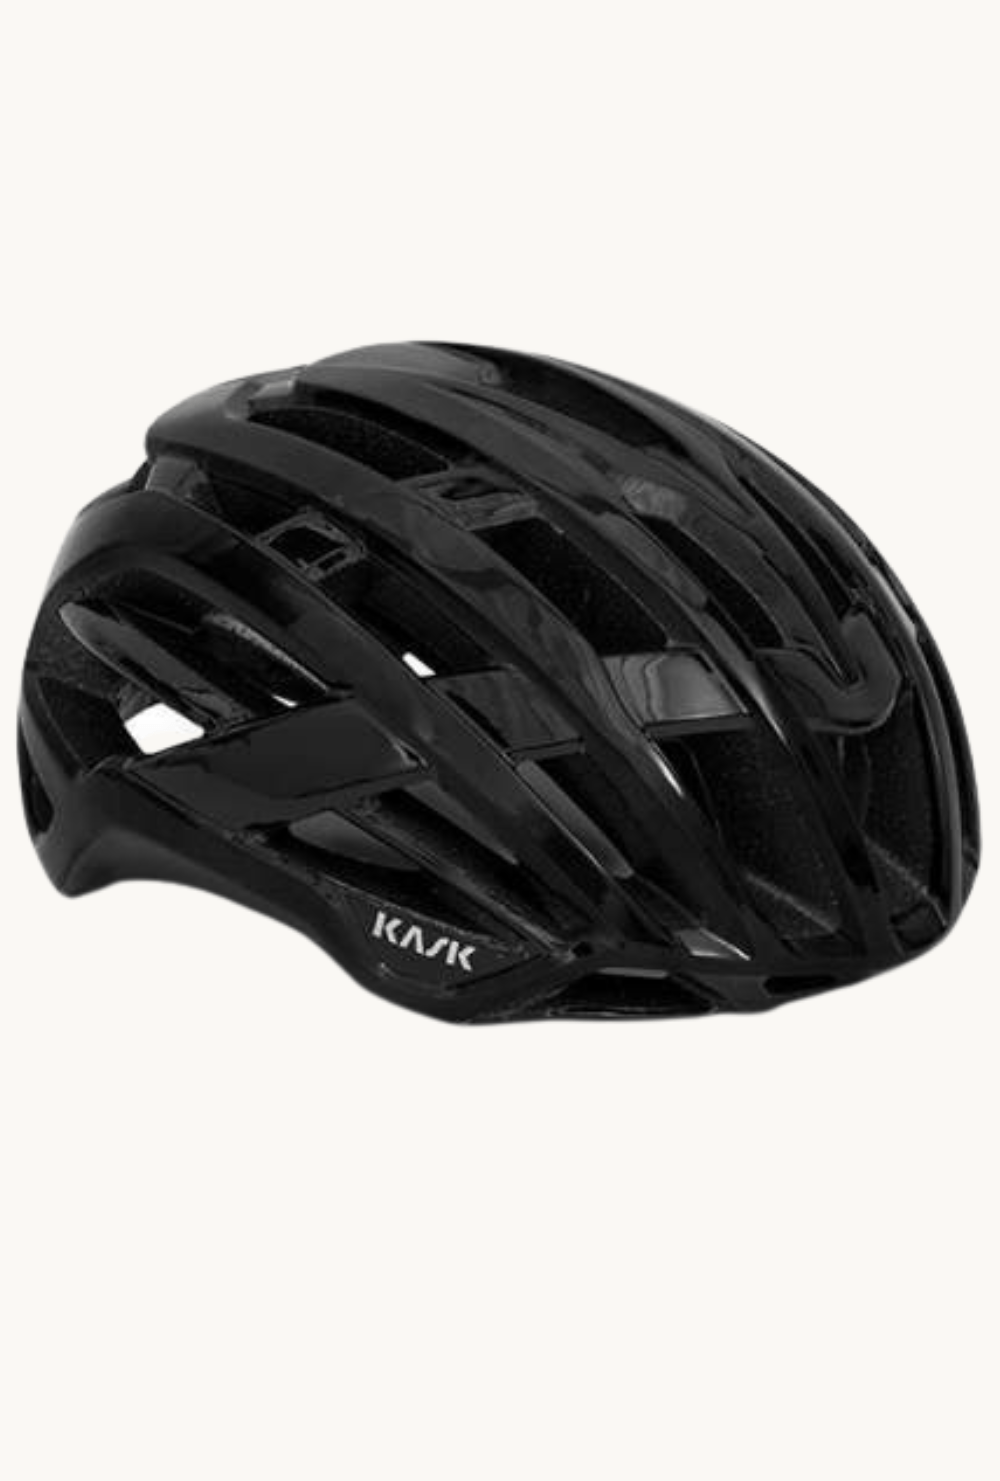 Helmet - Kask Valegro Blacklarge / Black